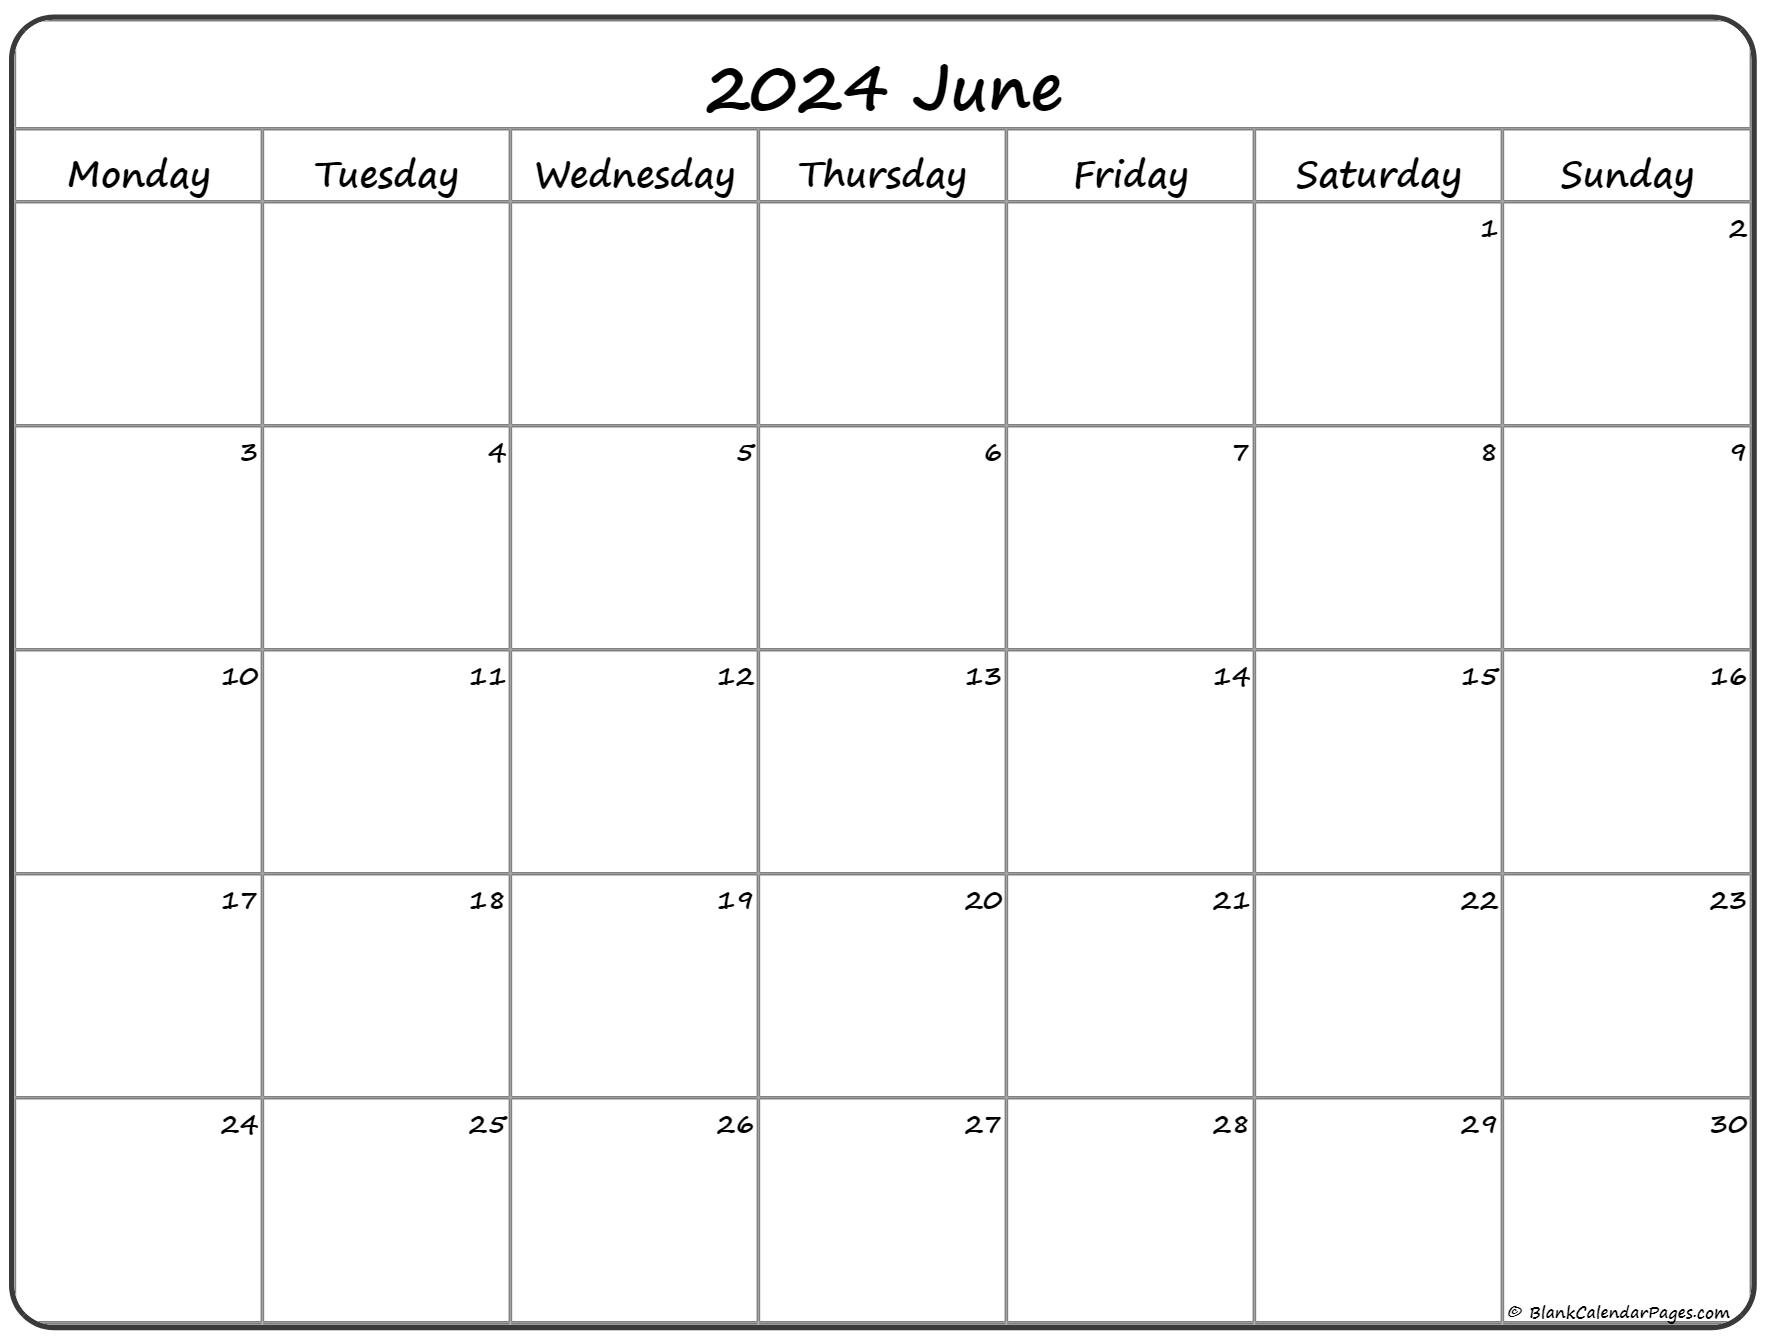 calendar-june-2022-template-printable-calendar-2023